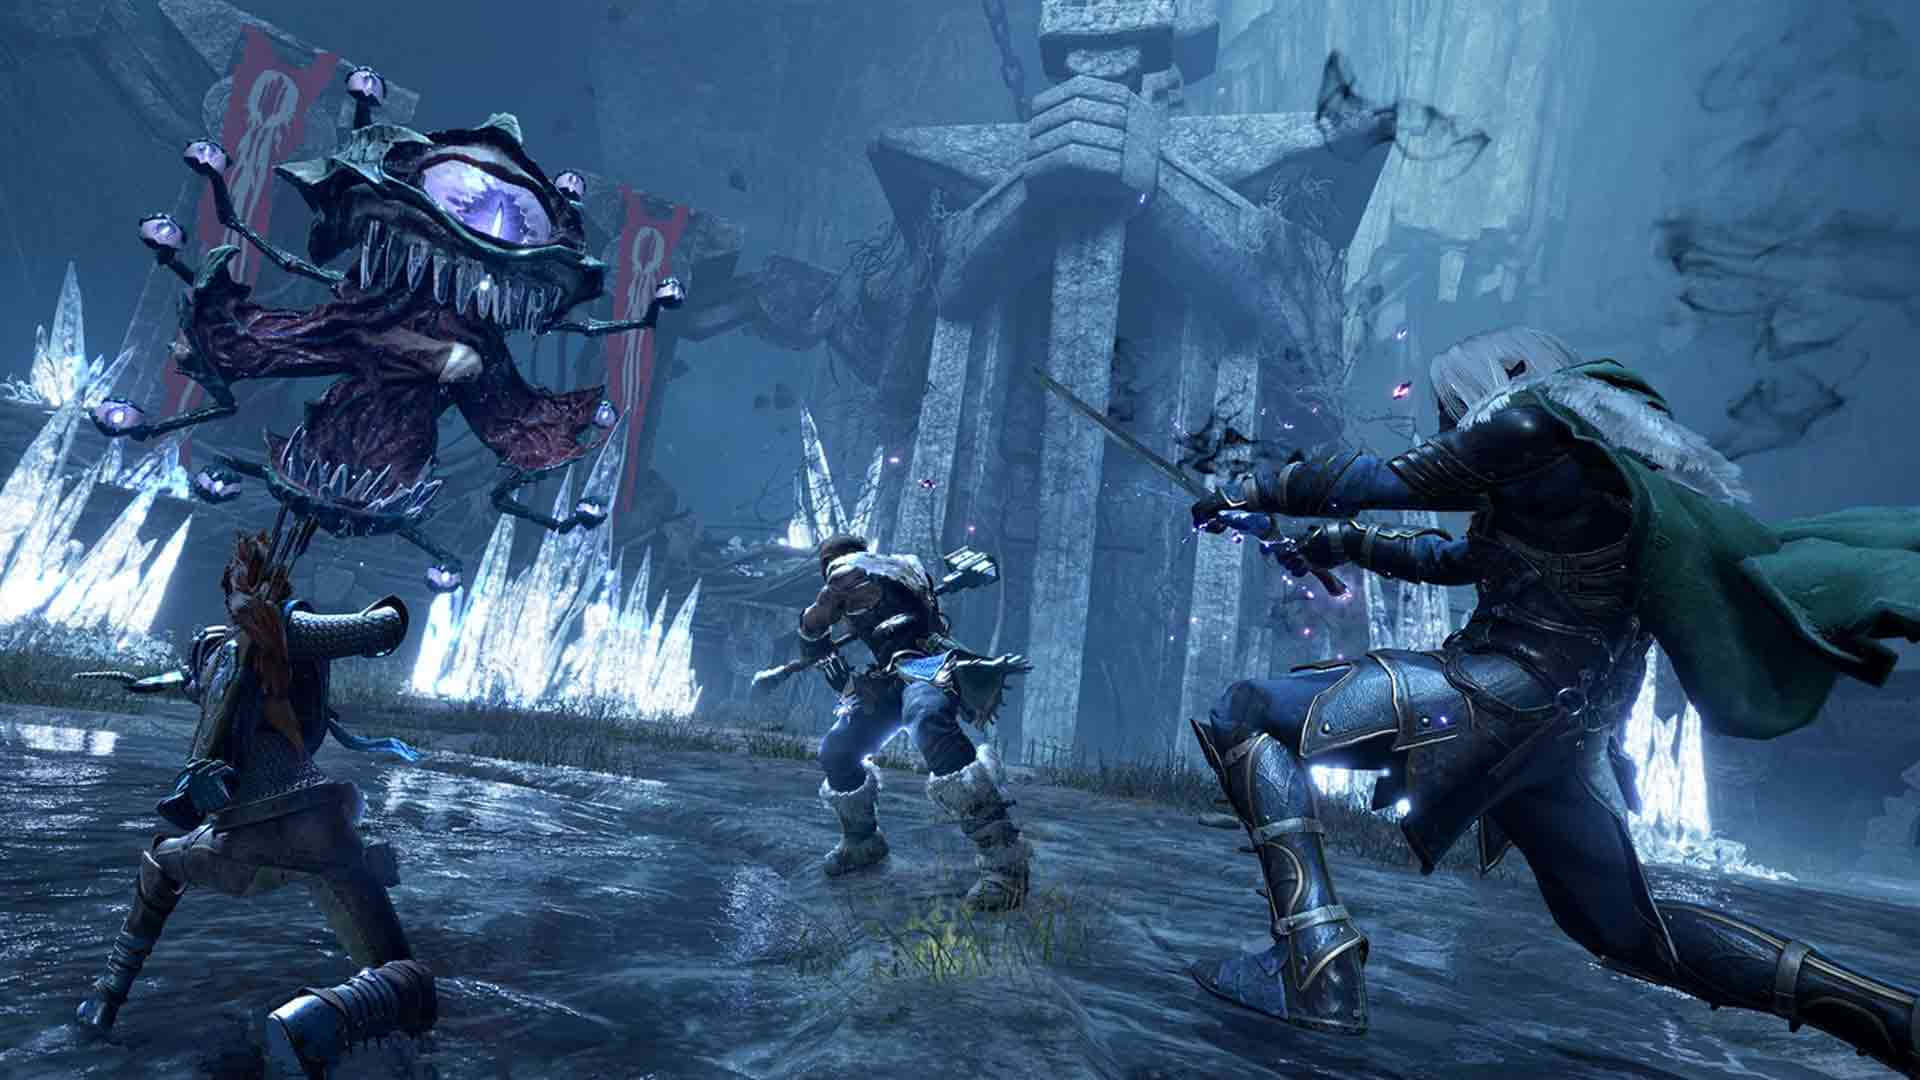 An epic battle scene from the game Dark Alliance Wallpaper